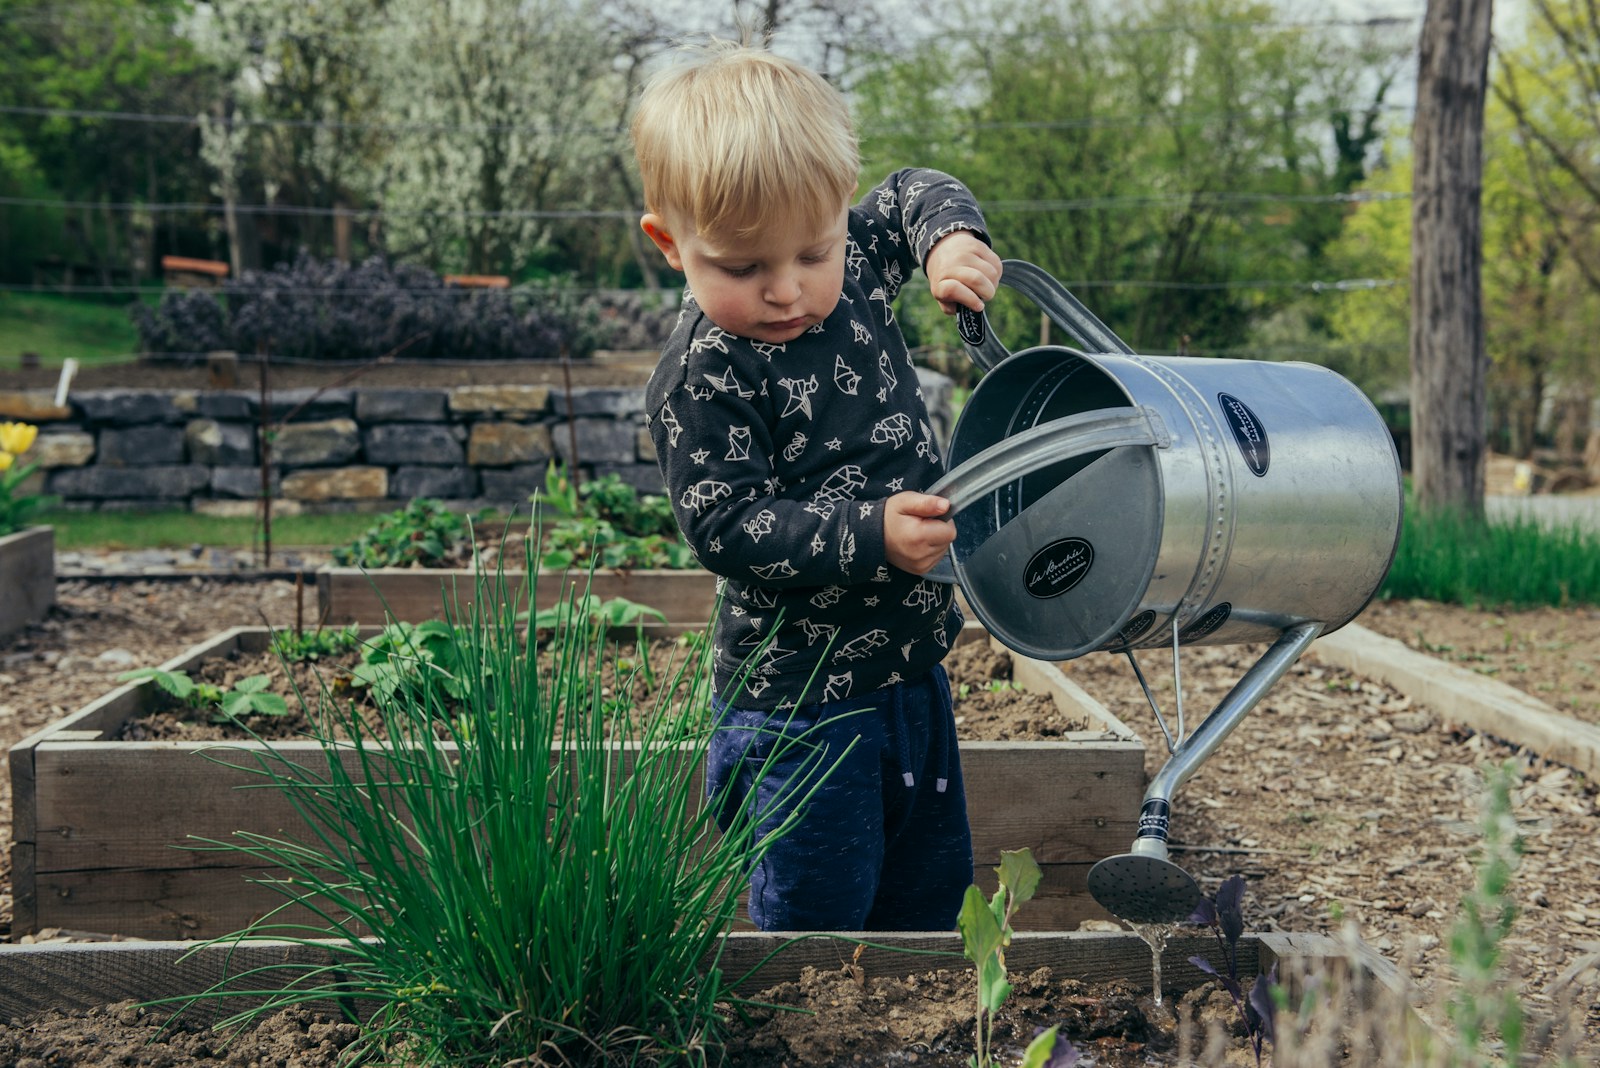 Smart Watering Strategies for a Cool Summer Garden